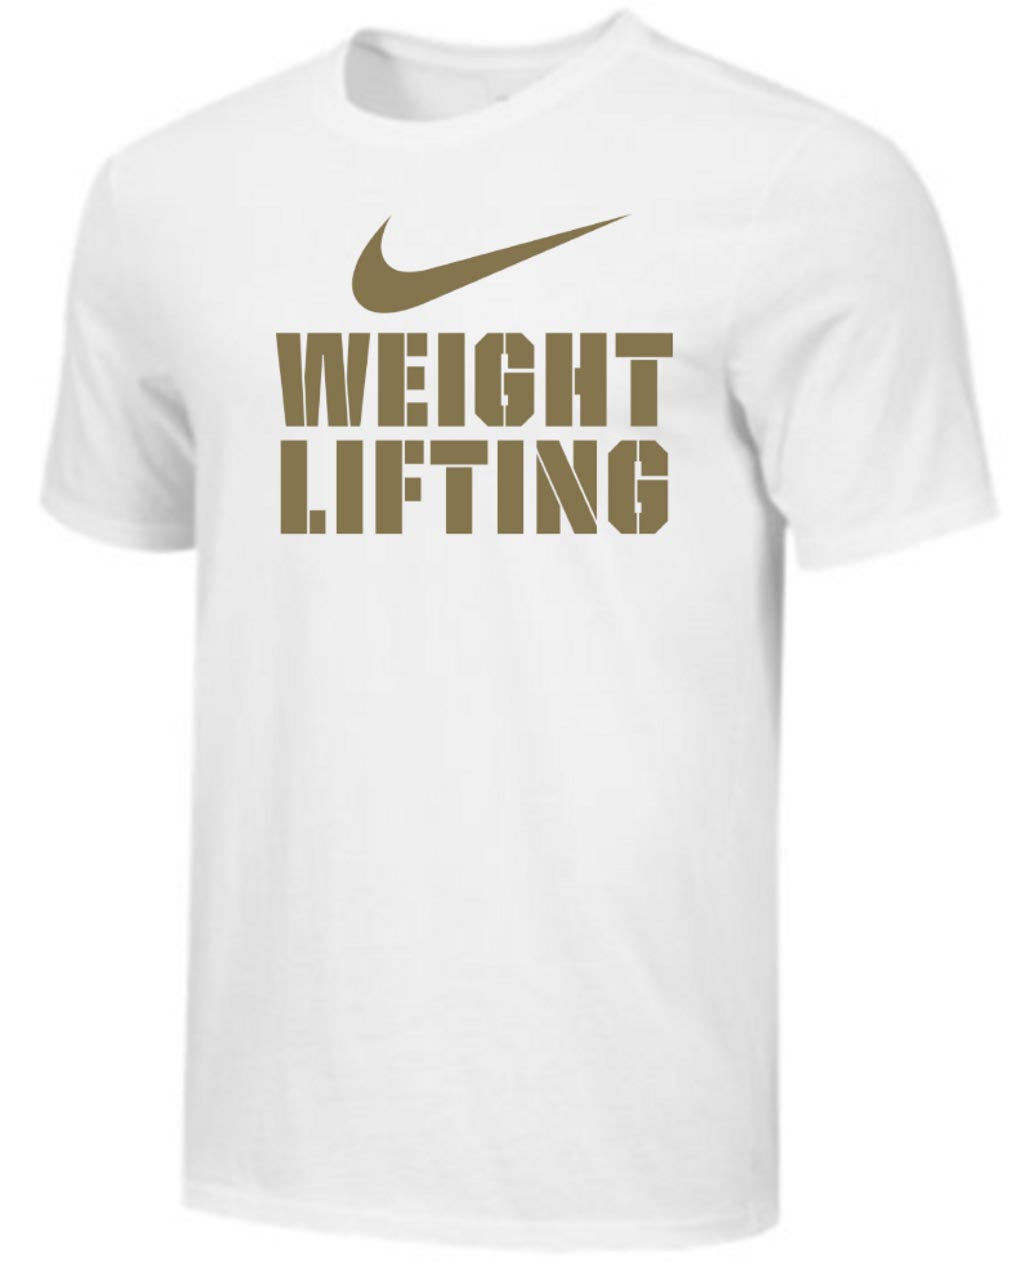 Nike Weightlifting T-Shirt